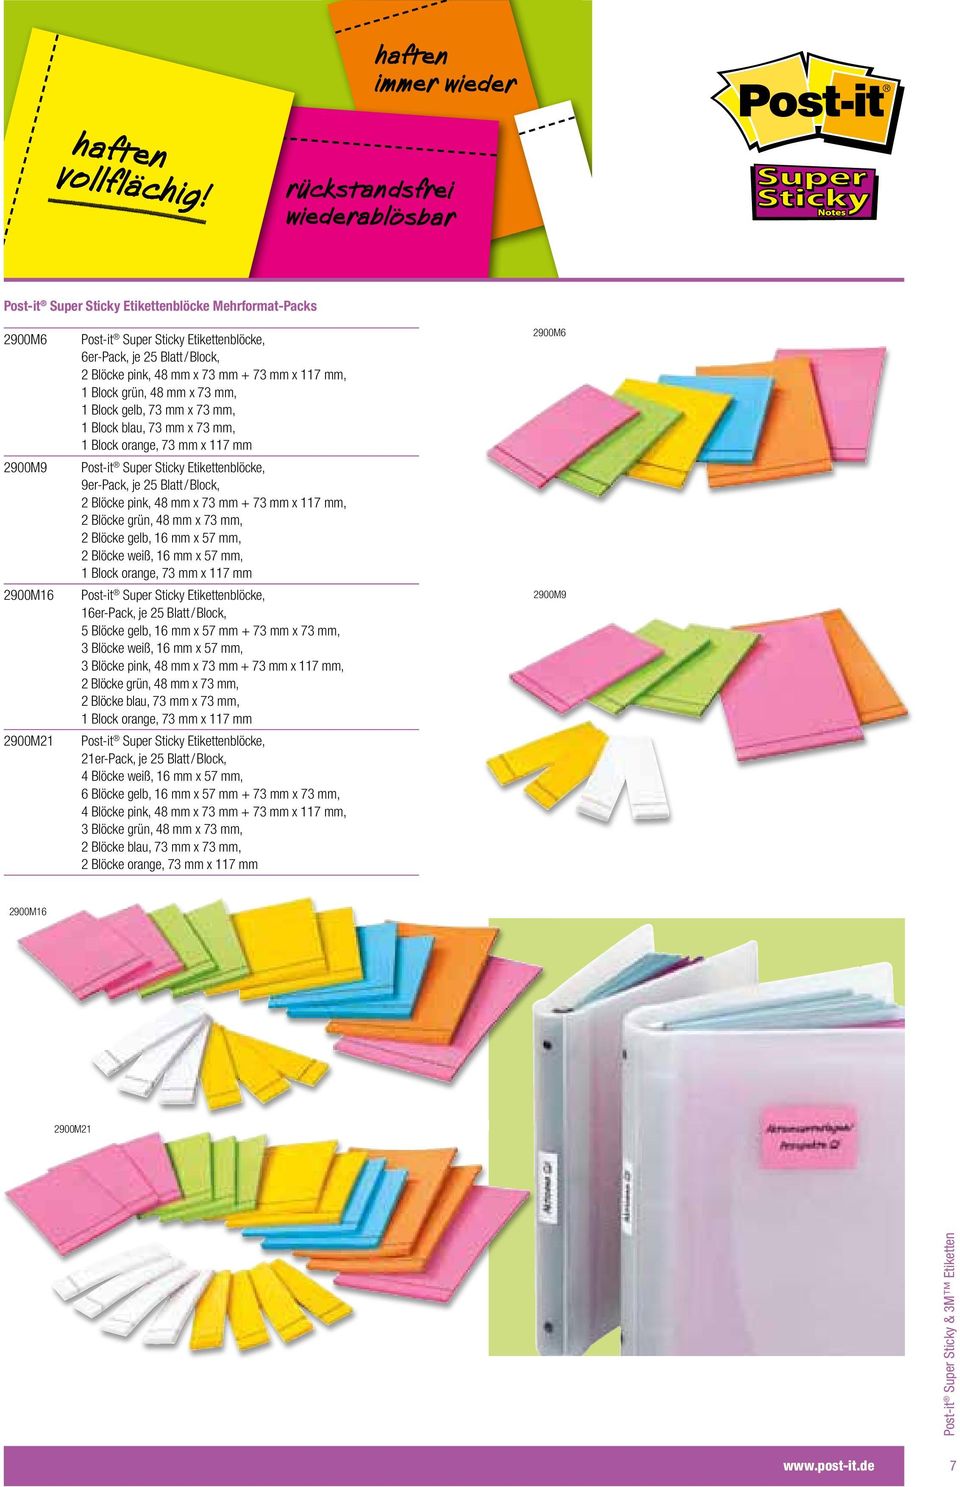 Sticky Etikettenblöcke, 9er-Pack, je 25 Blatt / Block, 2 Blöcke pink, 48 mm x 73 mm + 73 mm x 117 mm, 2 Blöcke grün, 48 mm x 73 mm, 2 Blöcke gelb, 16 mm x 57 mm, 2 Blöcke weiß, 16 mm x 57 mm, 1 Block